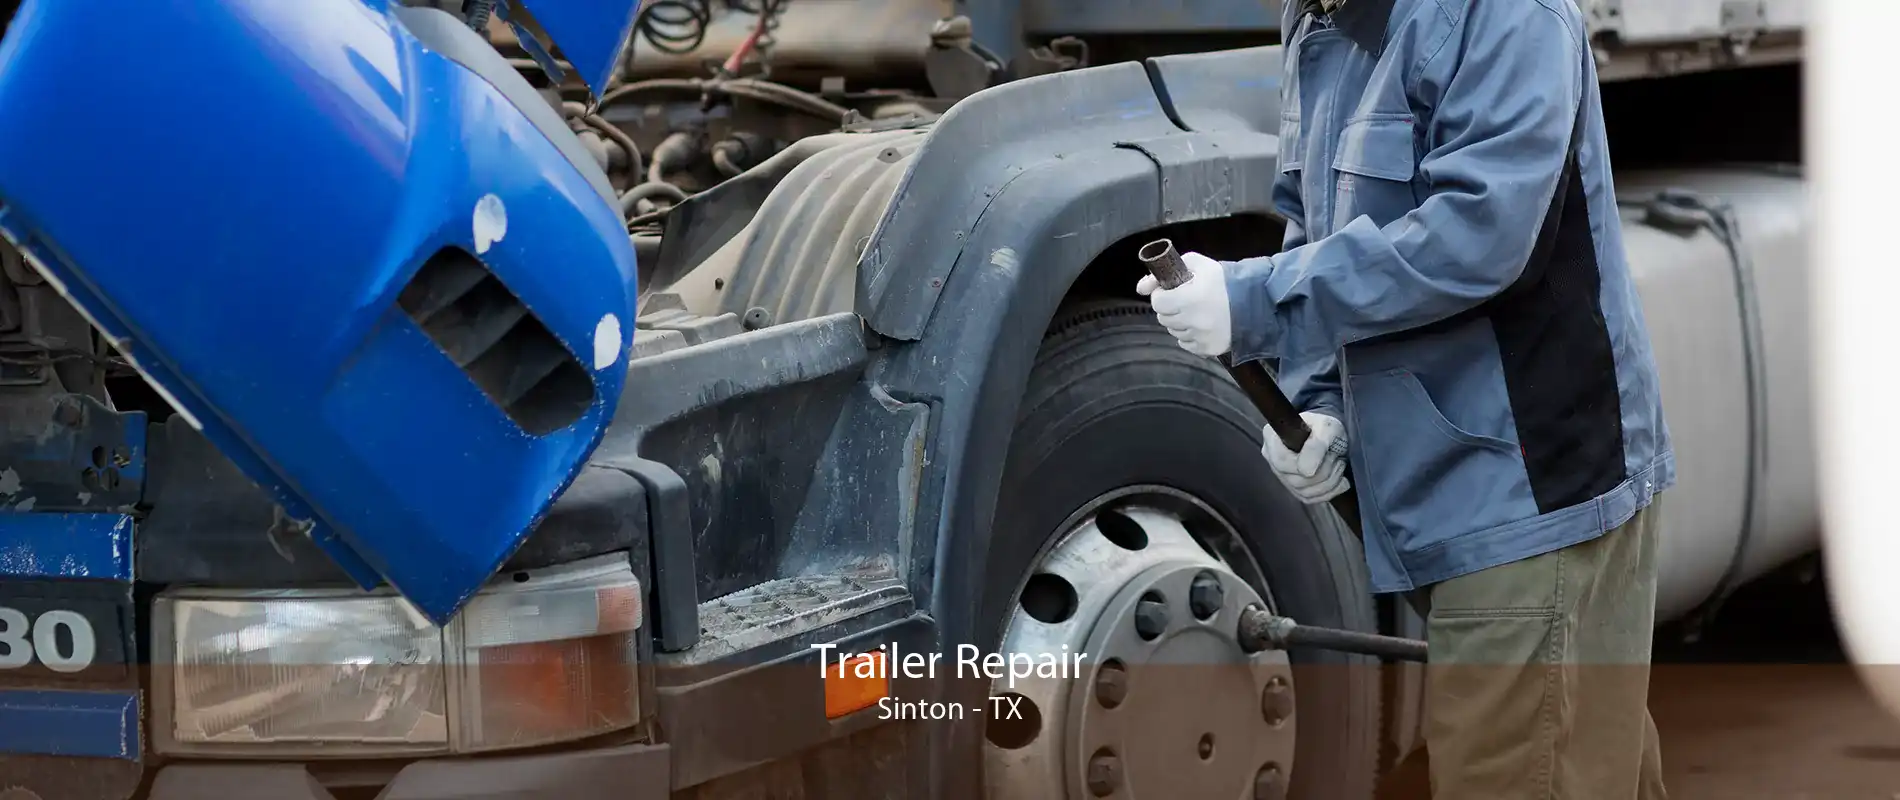 Trailer Repair Sinton - TX